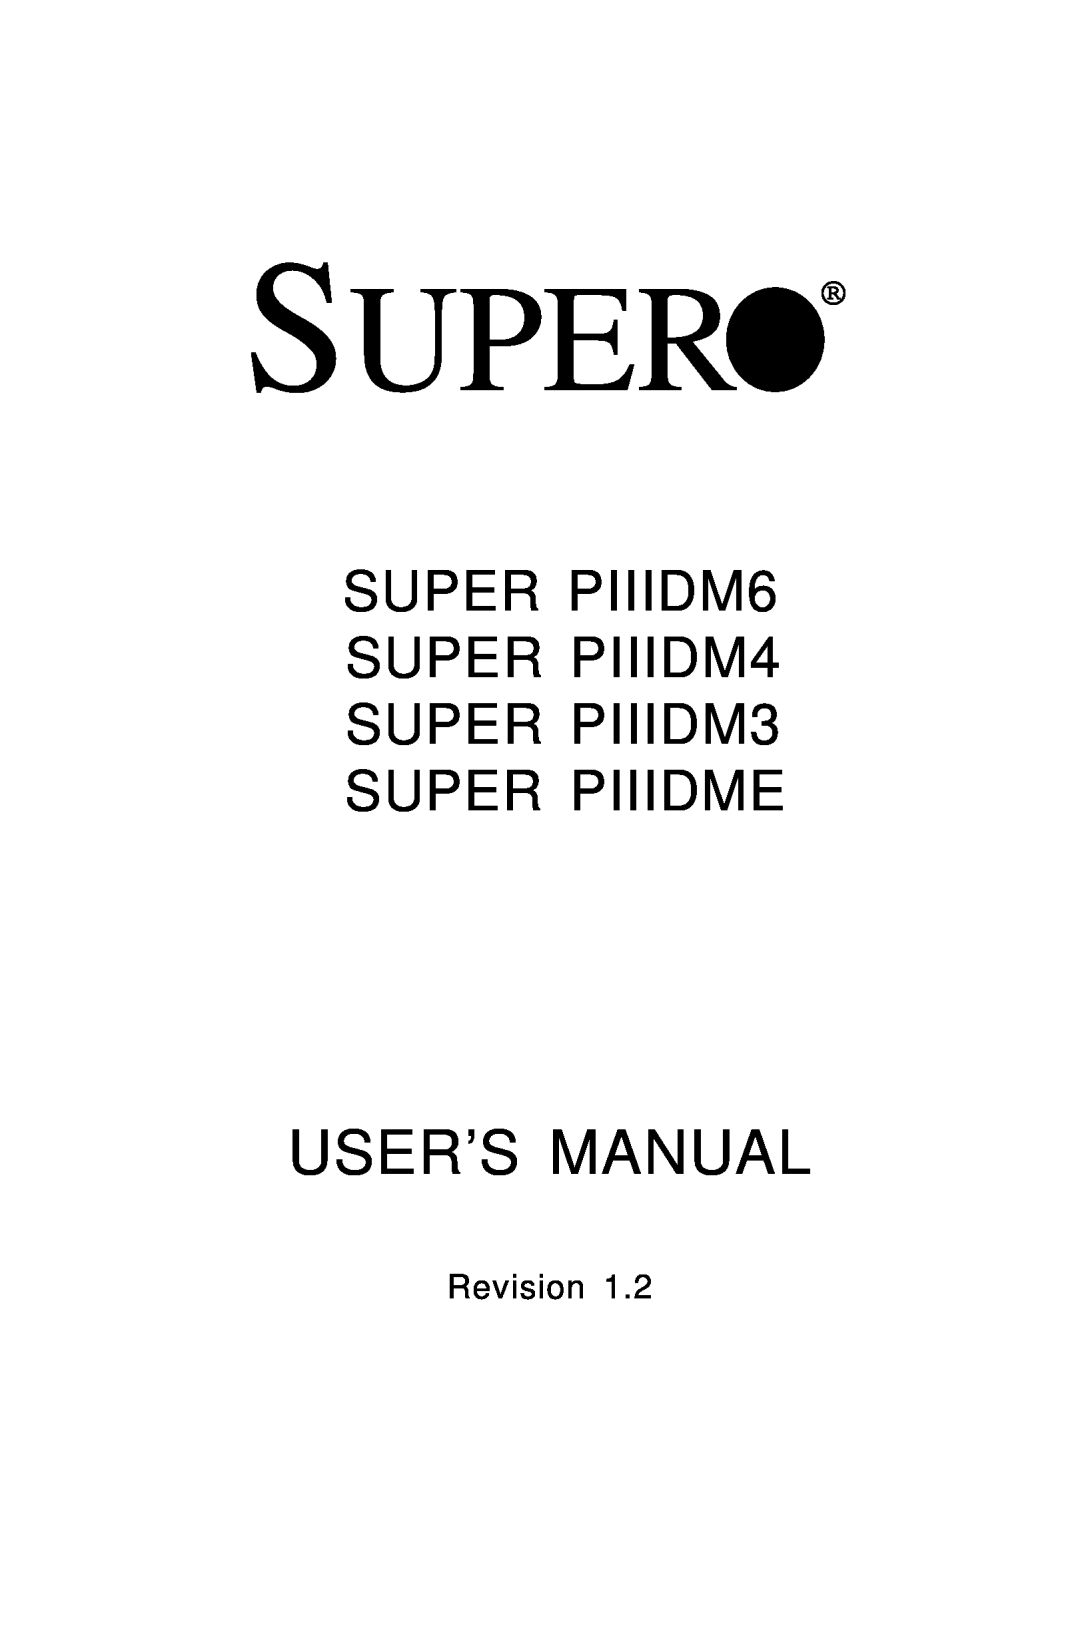 SUPER MICRO Computer Super PIIIDME user manual User’S Manual, SUPER PIIIDM6 SUPER PIIIDM4 SUPER PIIIDM3 SUPER PIIIDME 